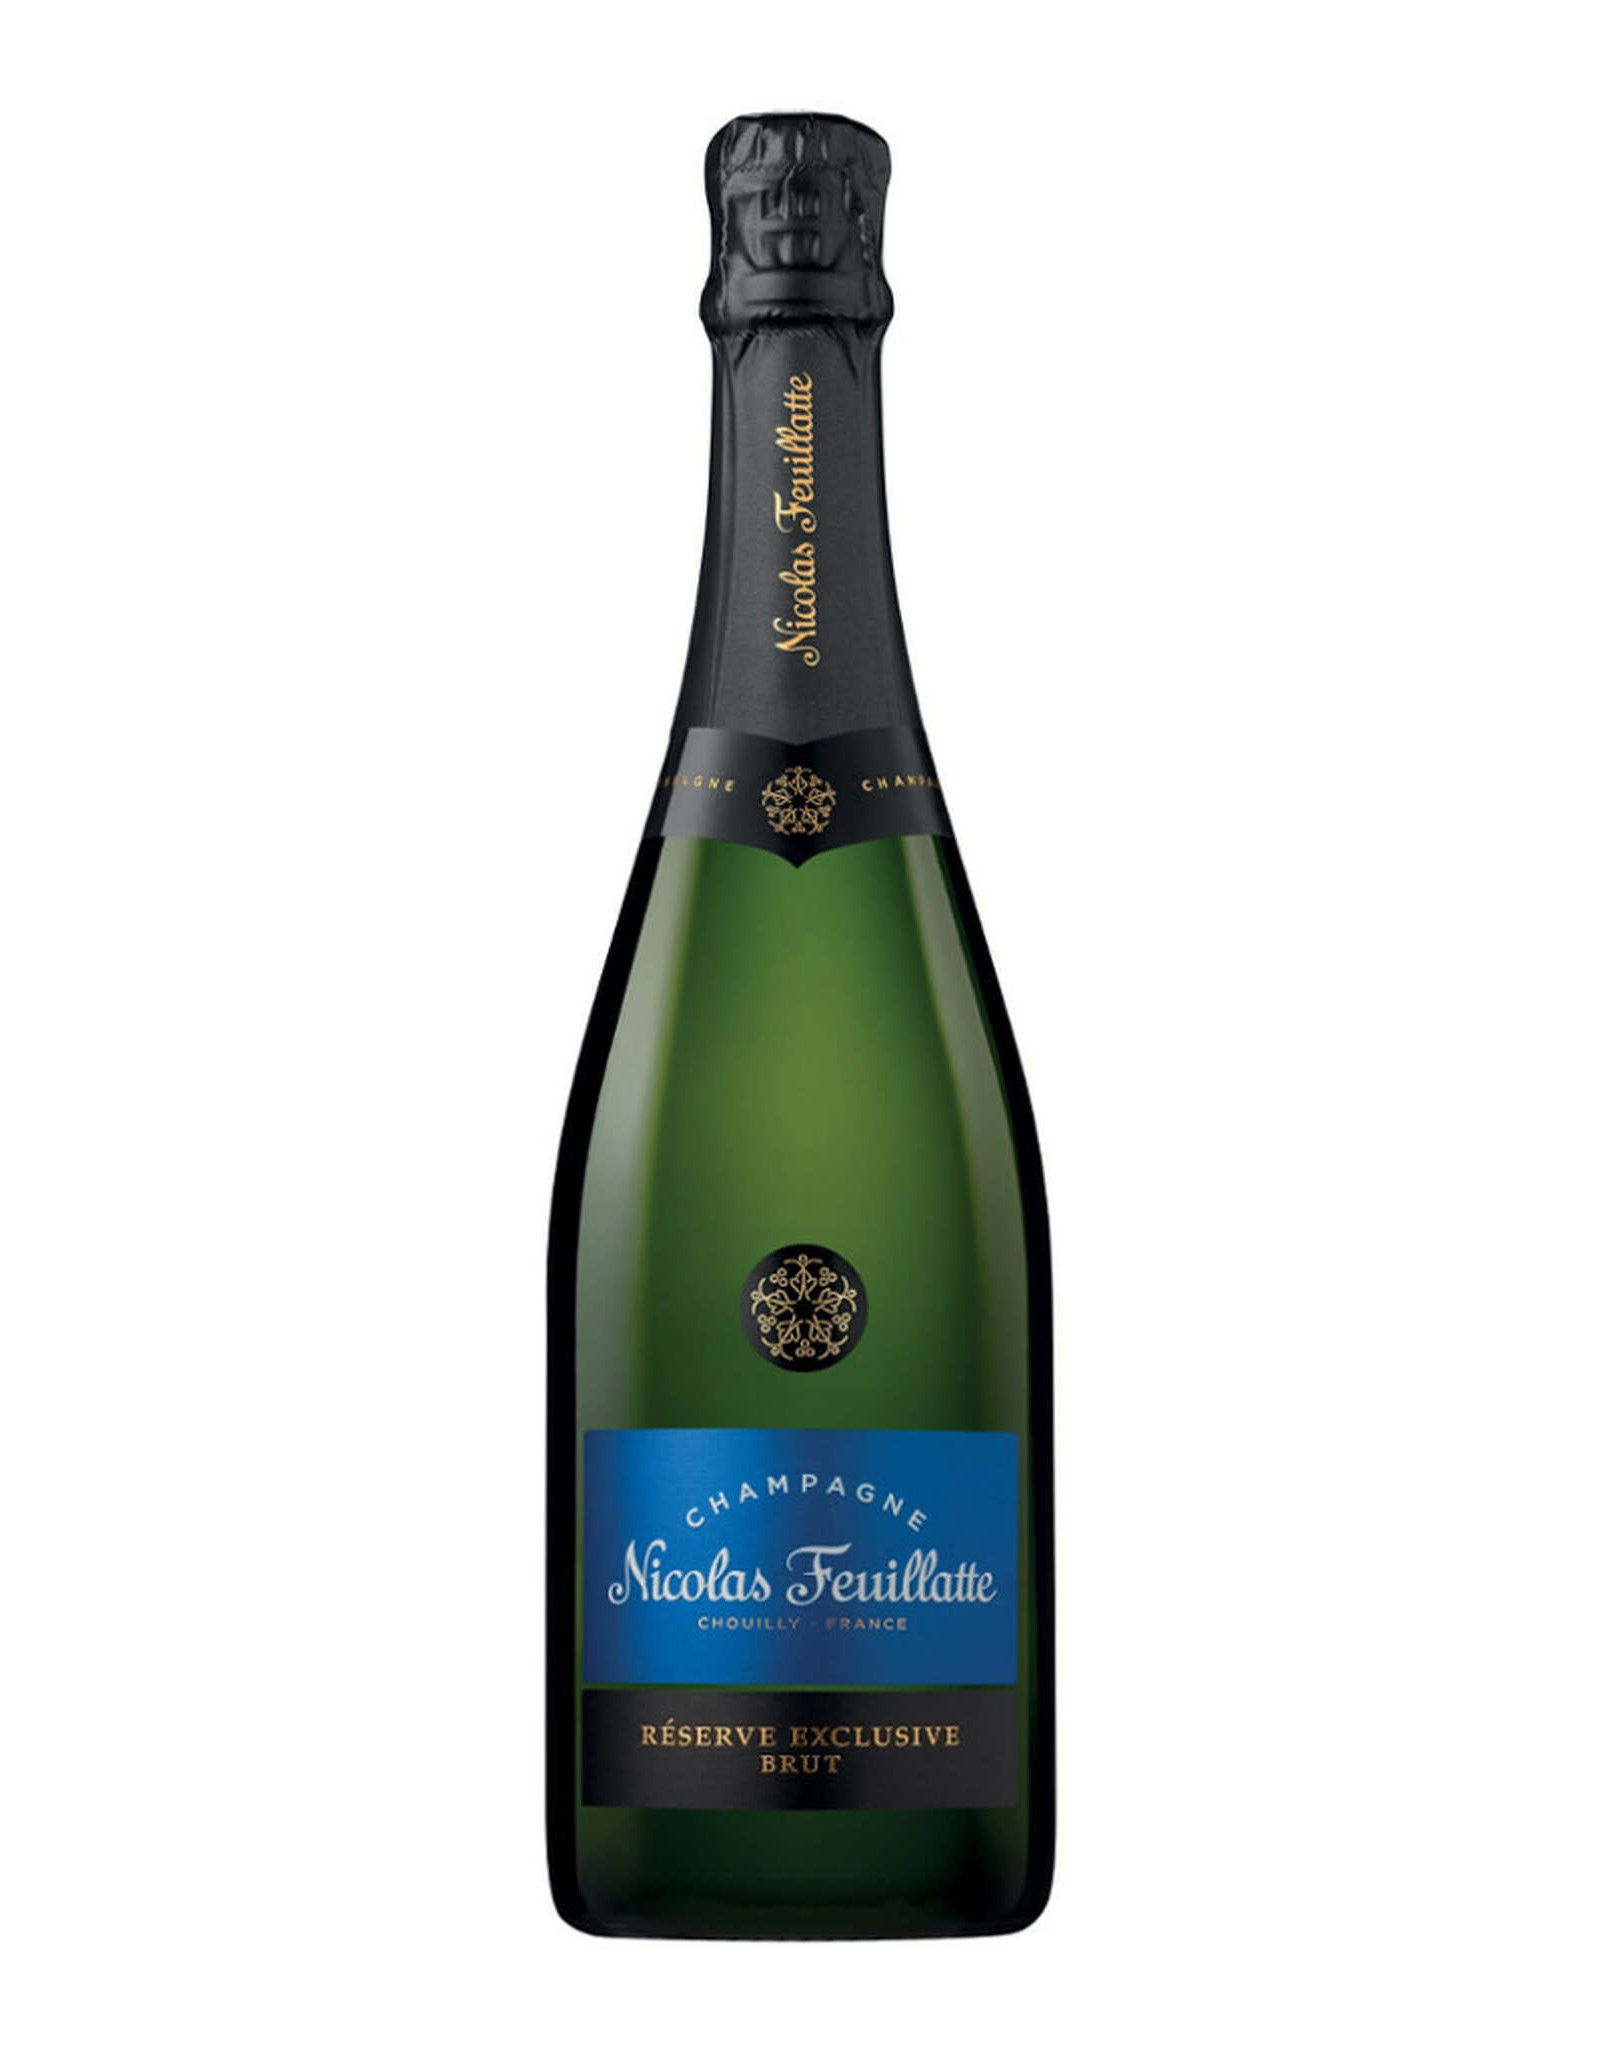 Nicolas Feuillatte, Reserve Exclusive Brut, Champagne, nv